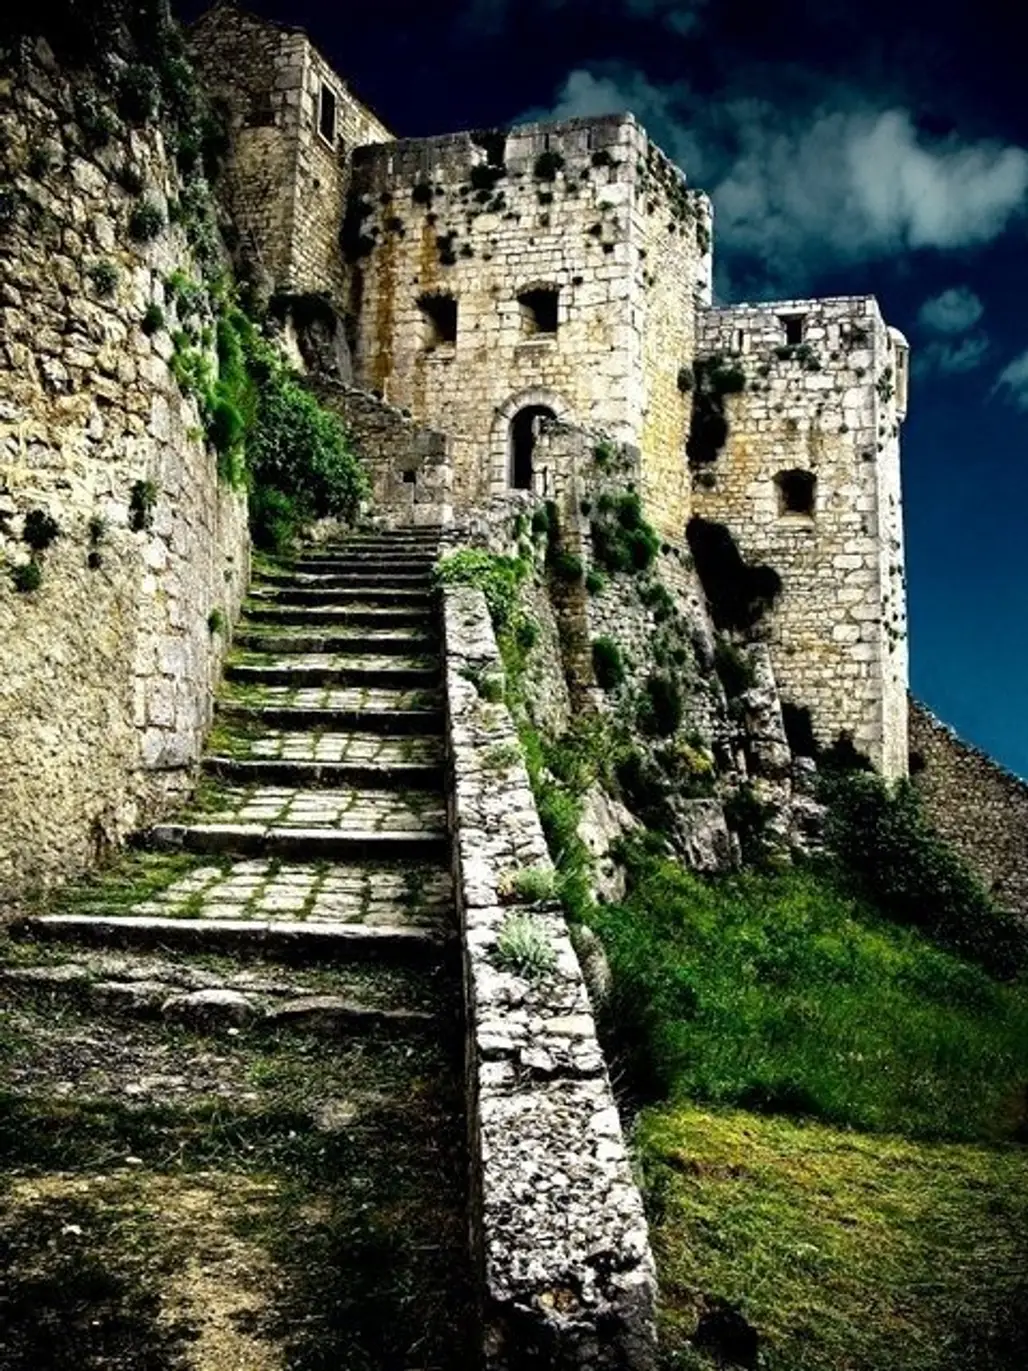 The Klis Fortress